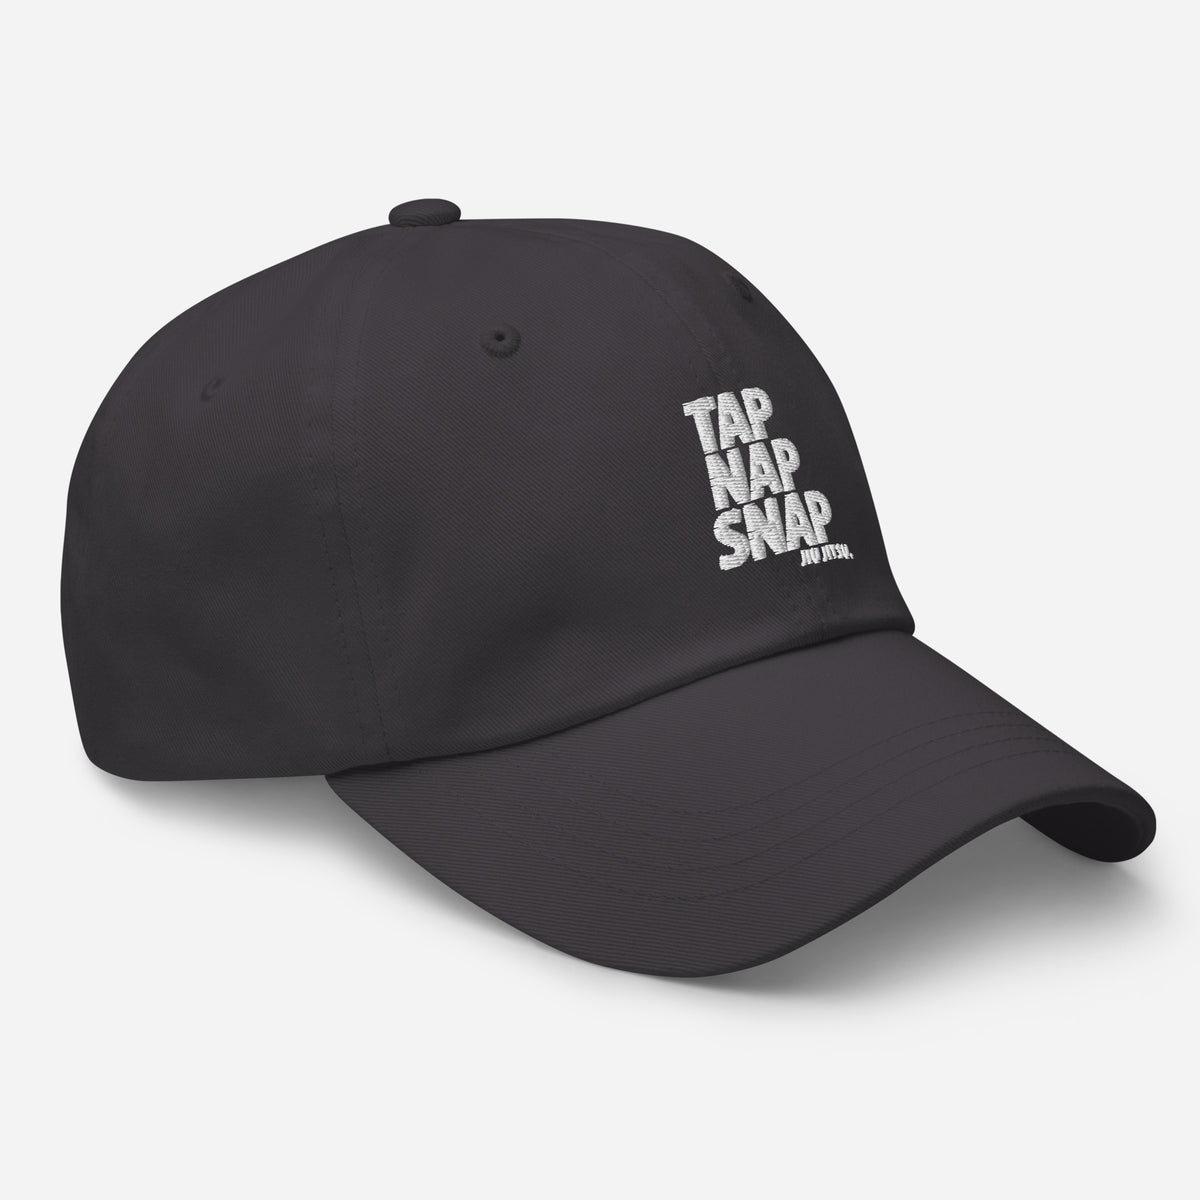 Tap Nap Snap Classic Dad Hat